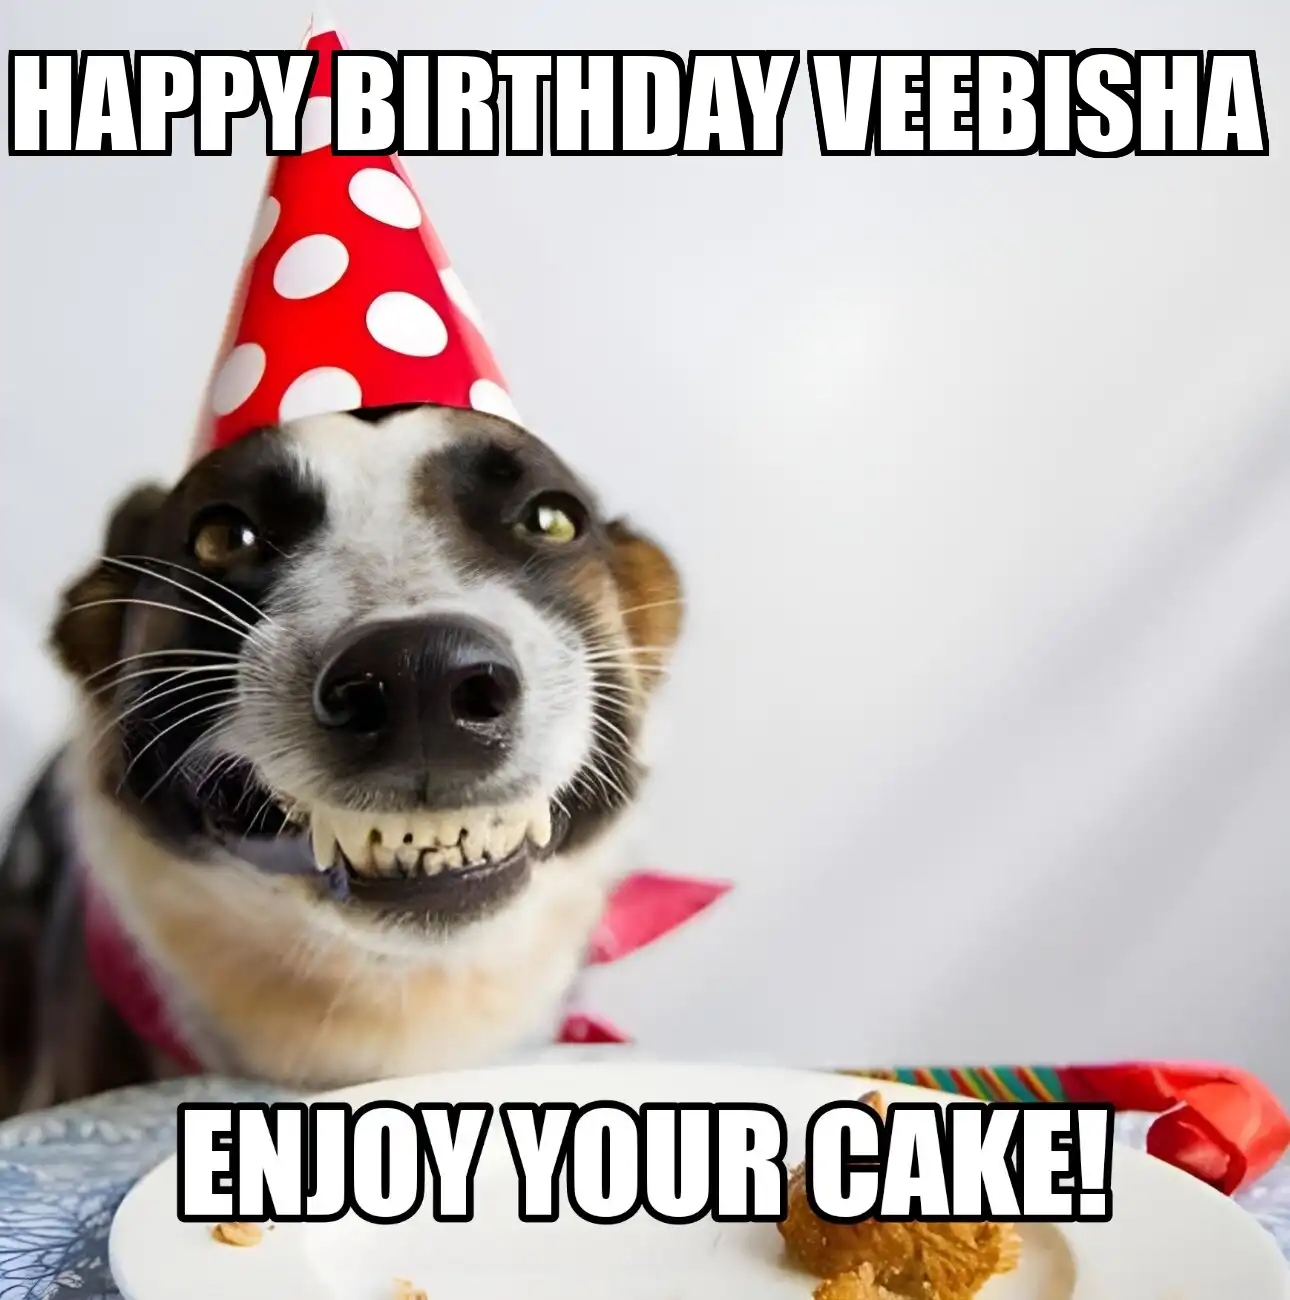 Happy Birthday Veebisha Enjoy Your Cake Dog Meme